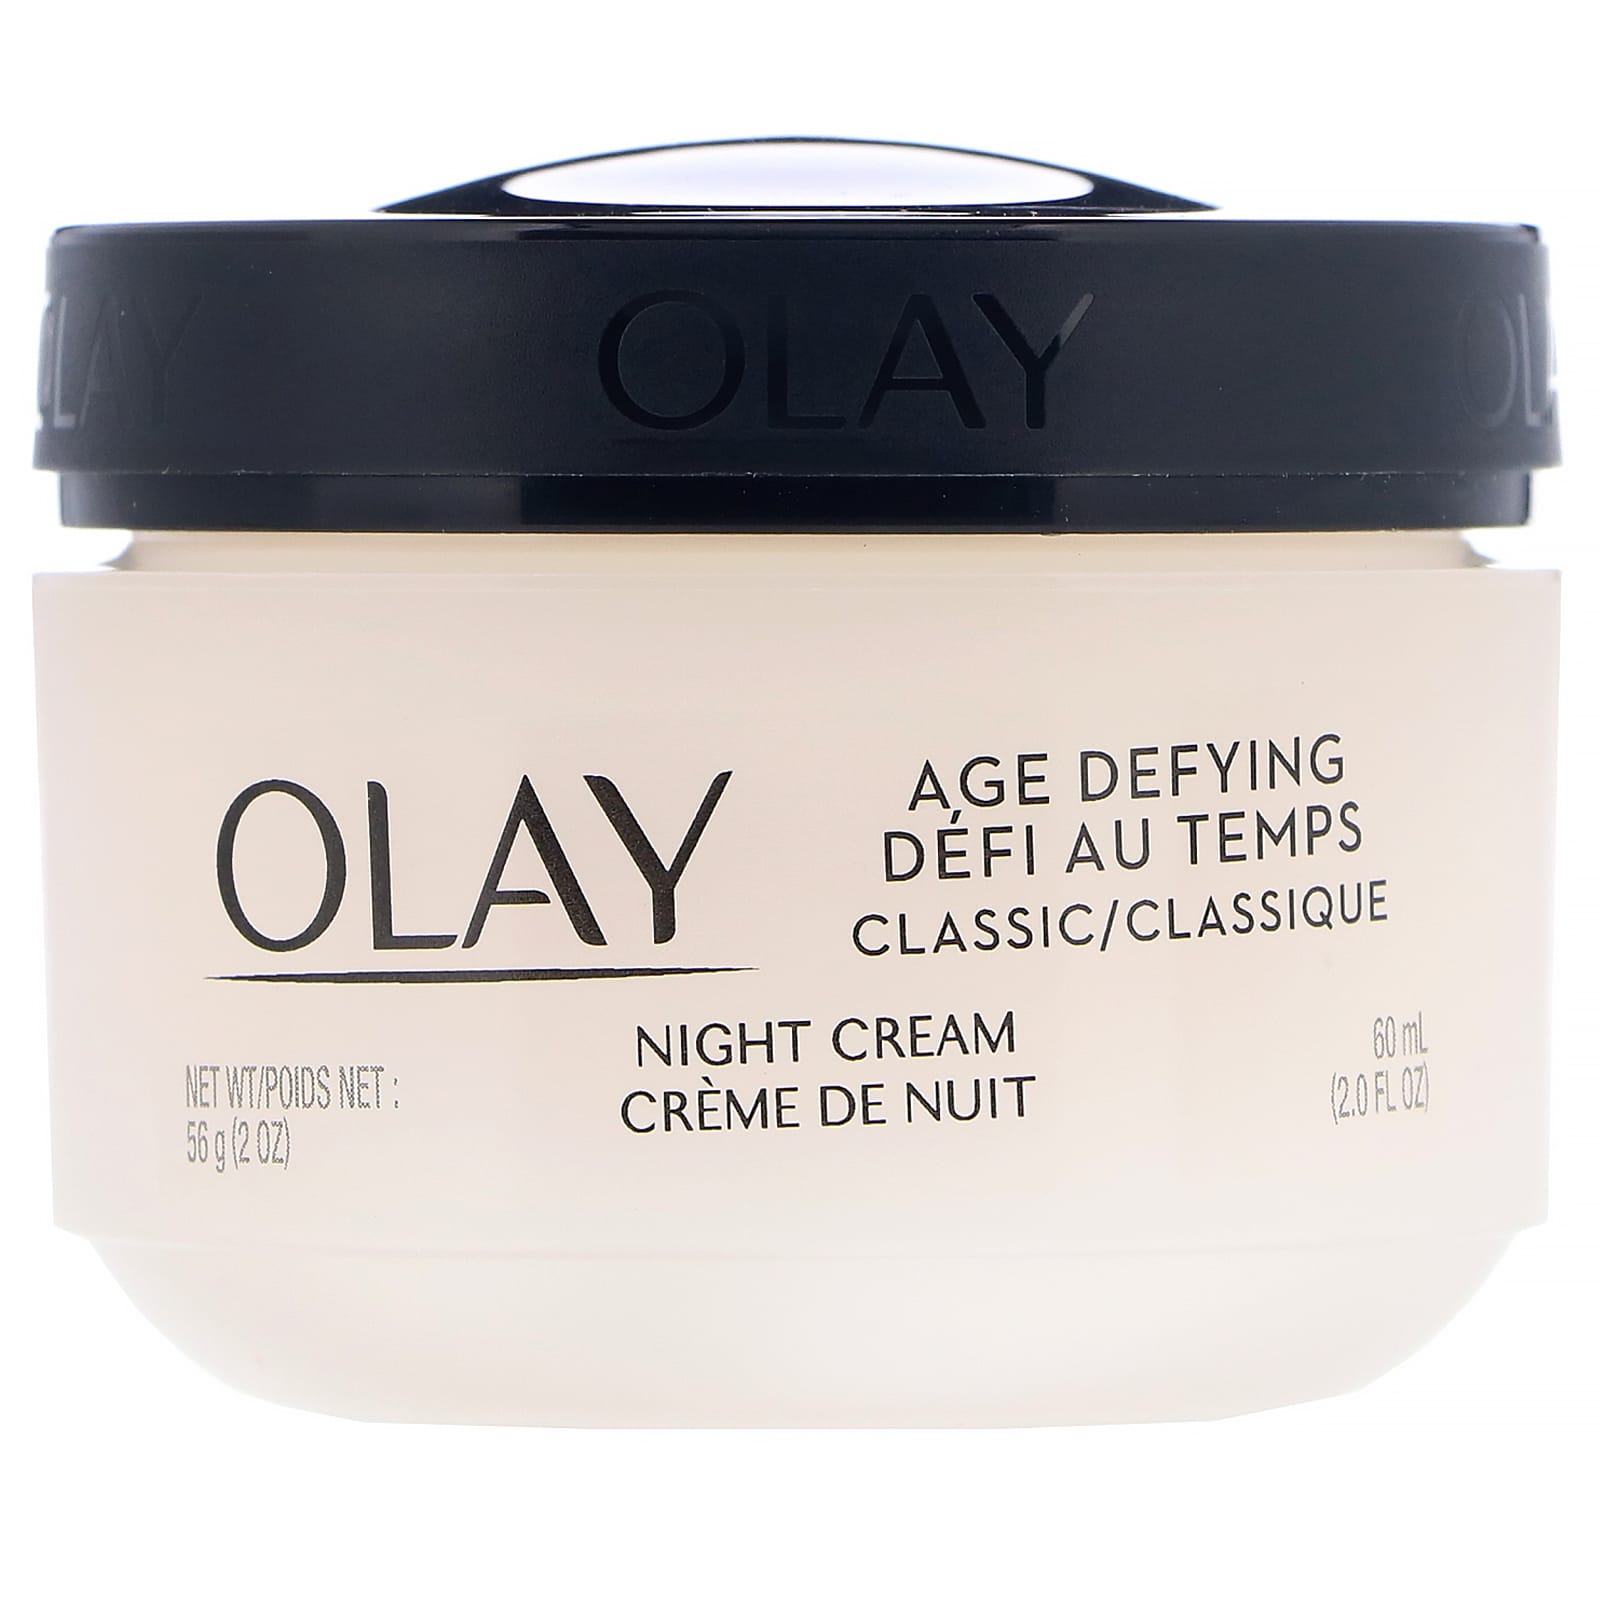 Olay, Age Defying, Classic, Night Cream (60 ml)